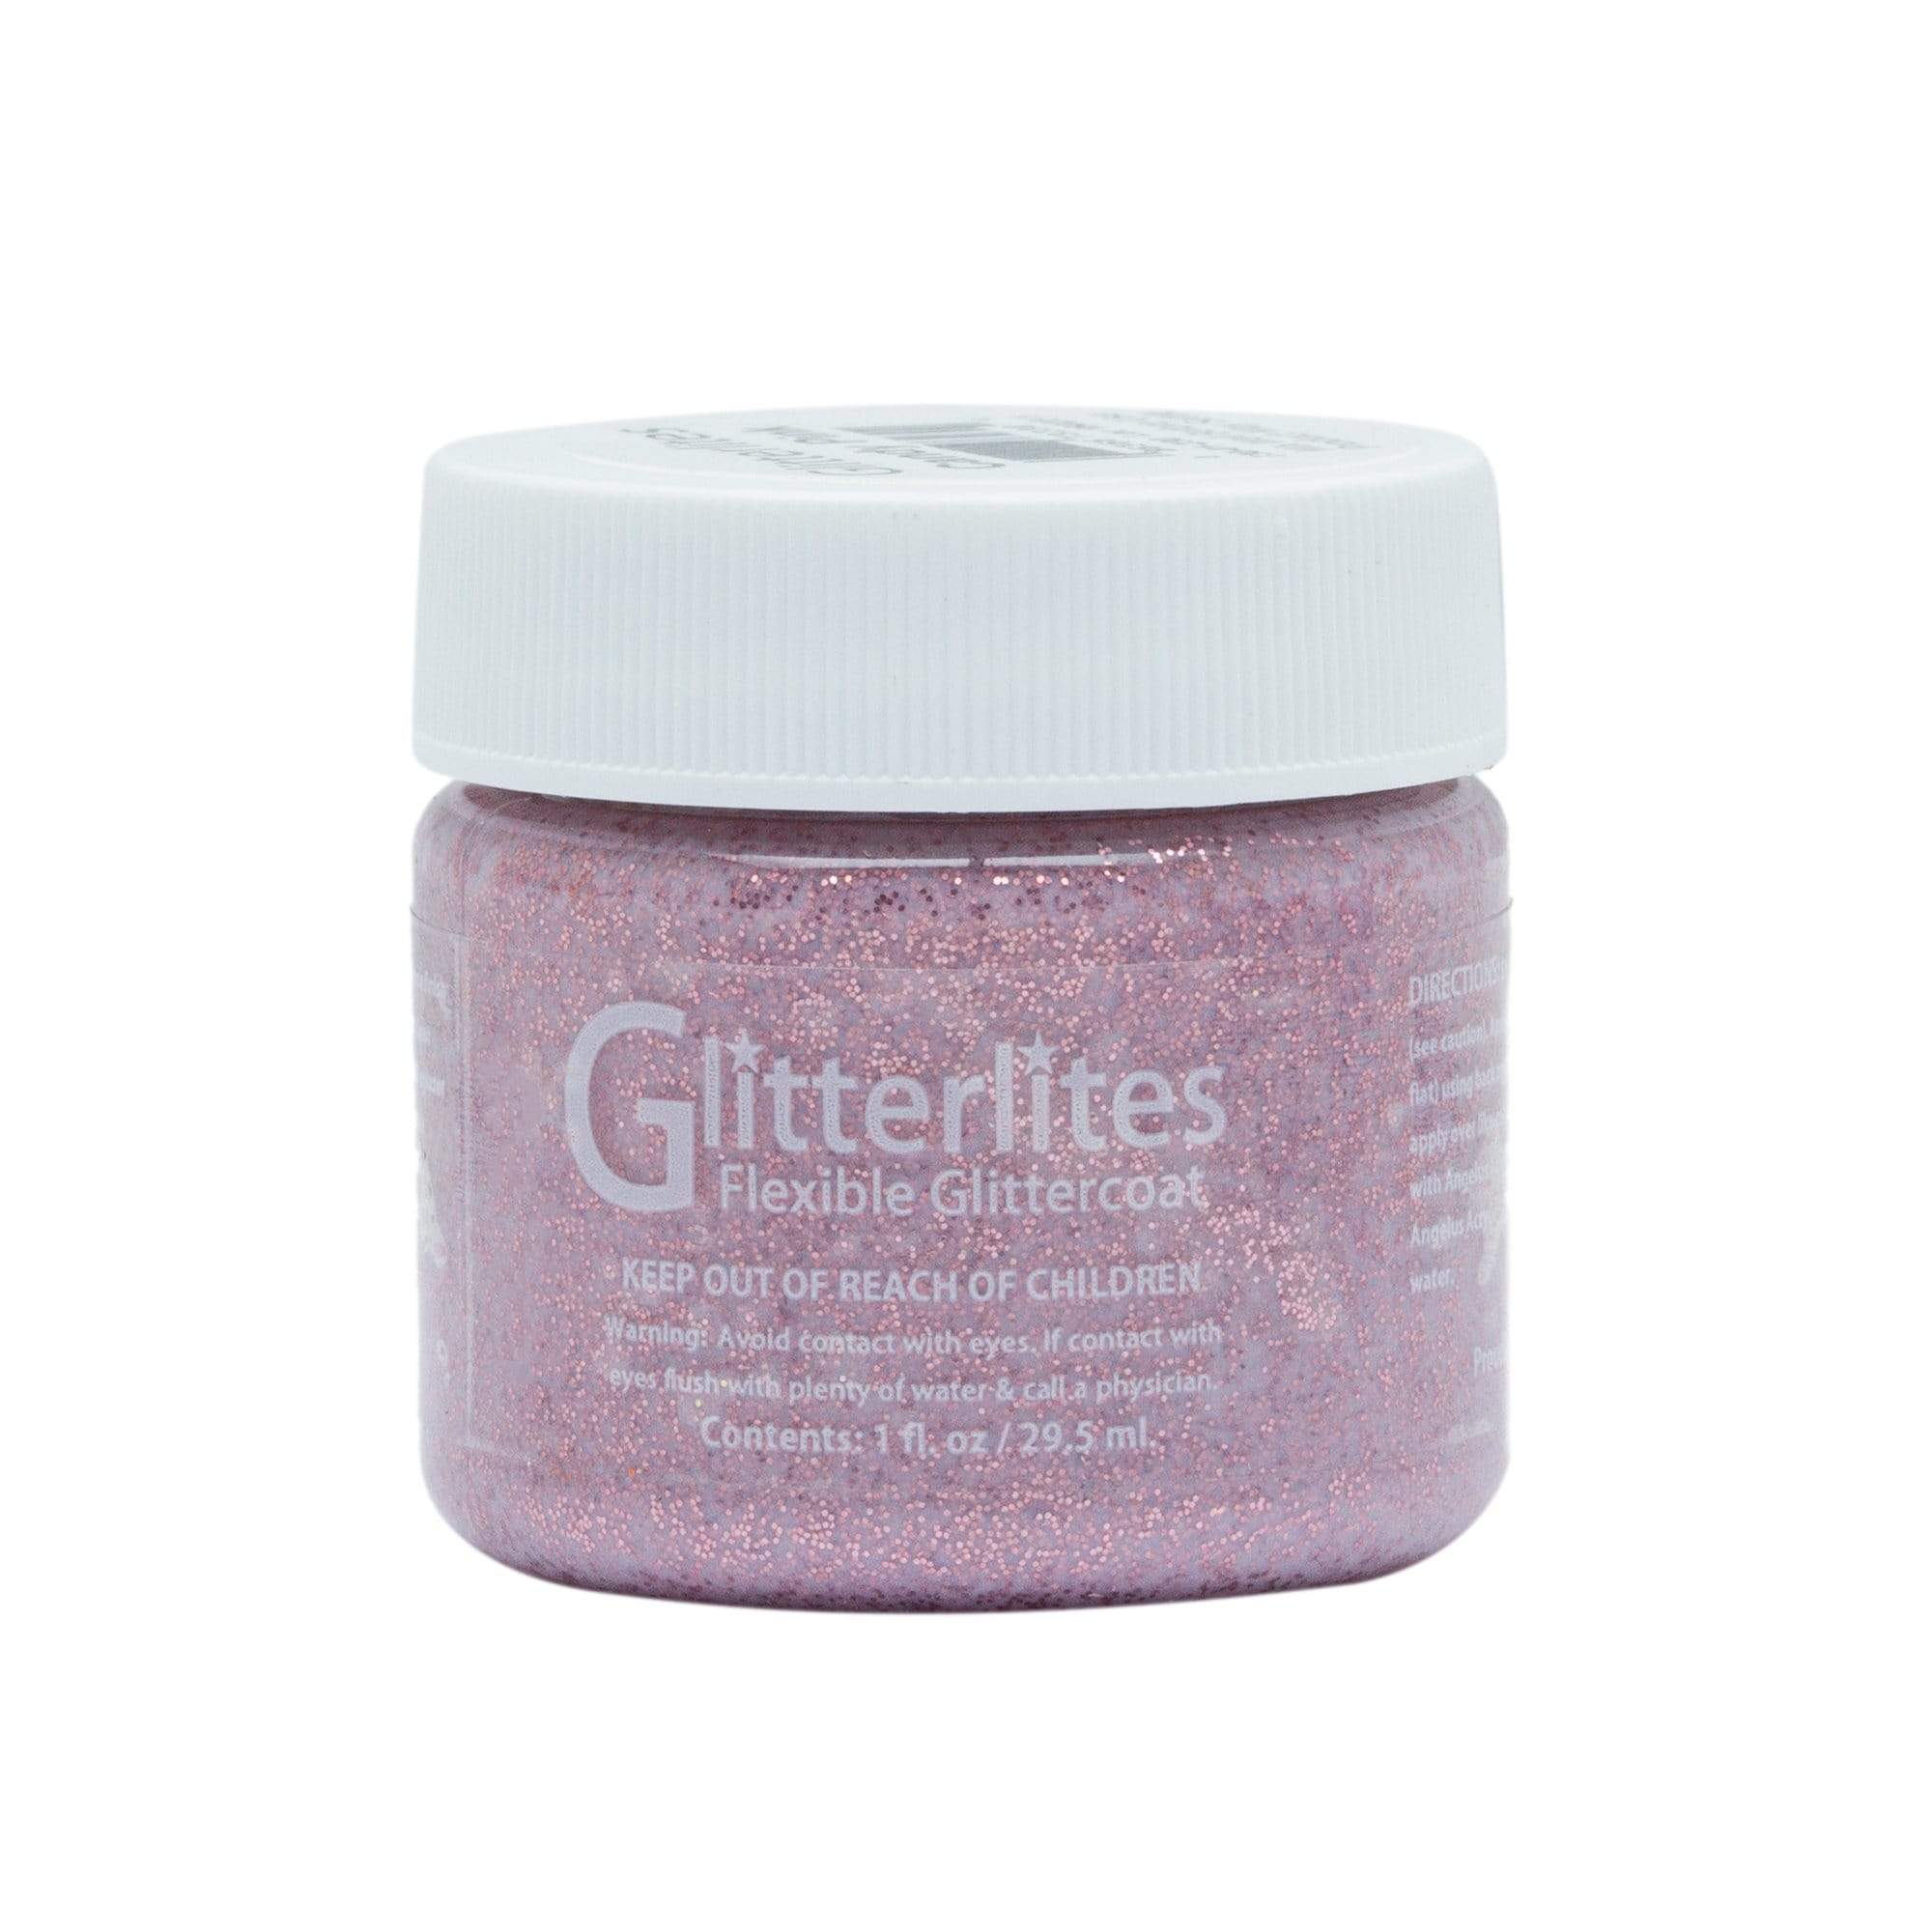 Angelus Glitterlites Flexible Glittercoat Paint - Candy Pink, 1 oz